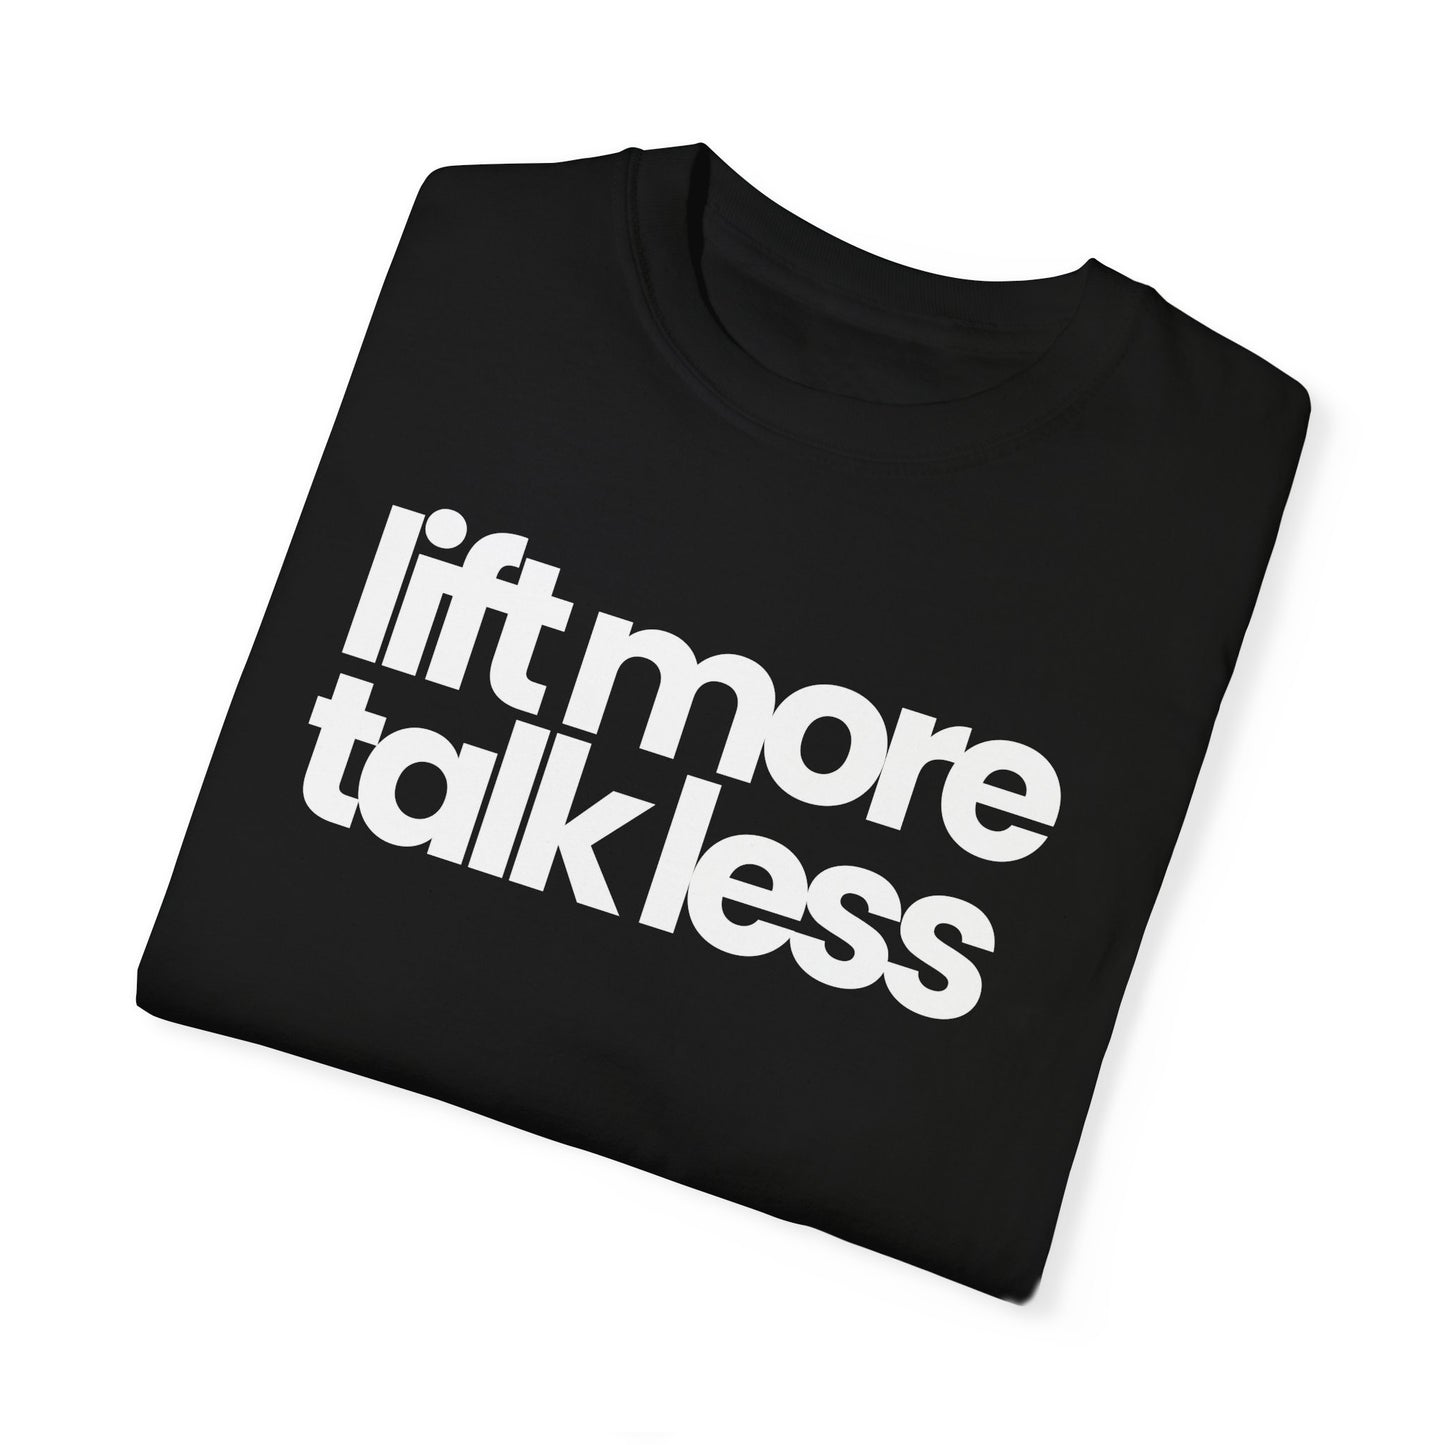 Lift more talk less